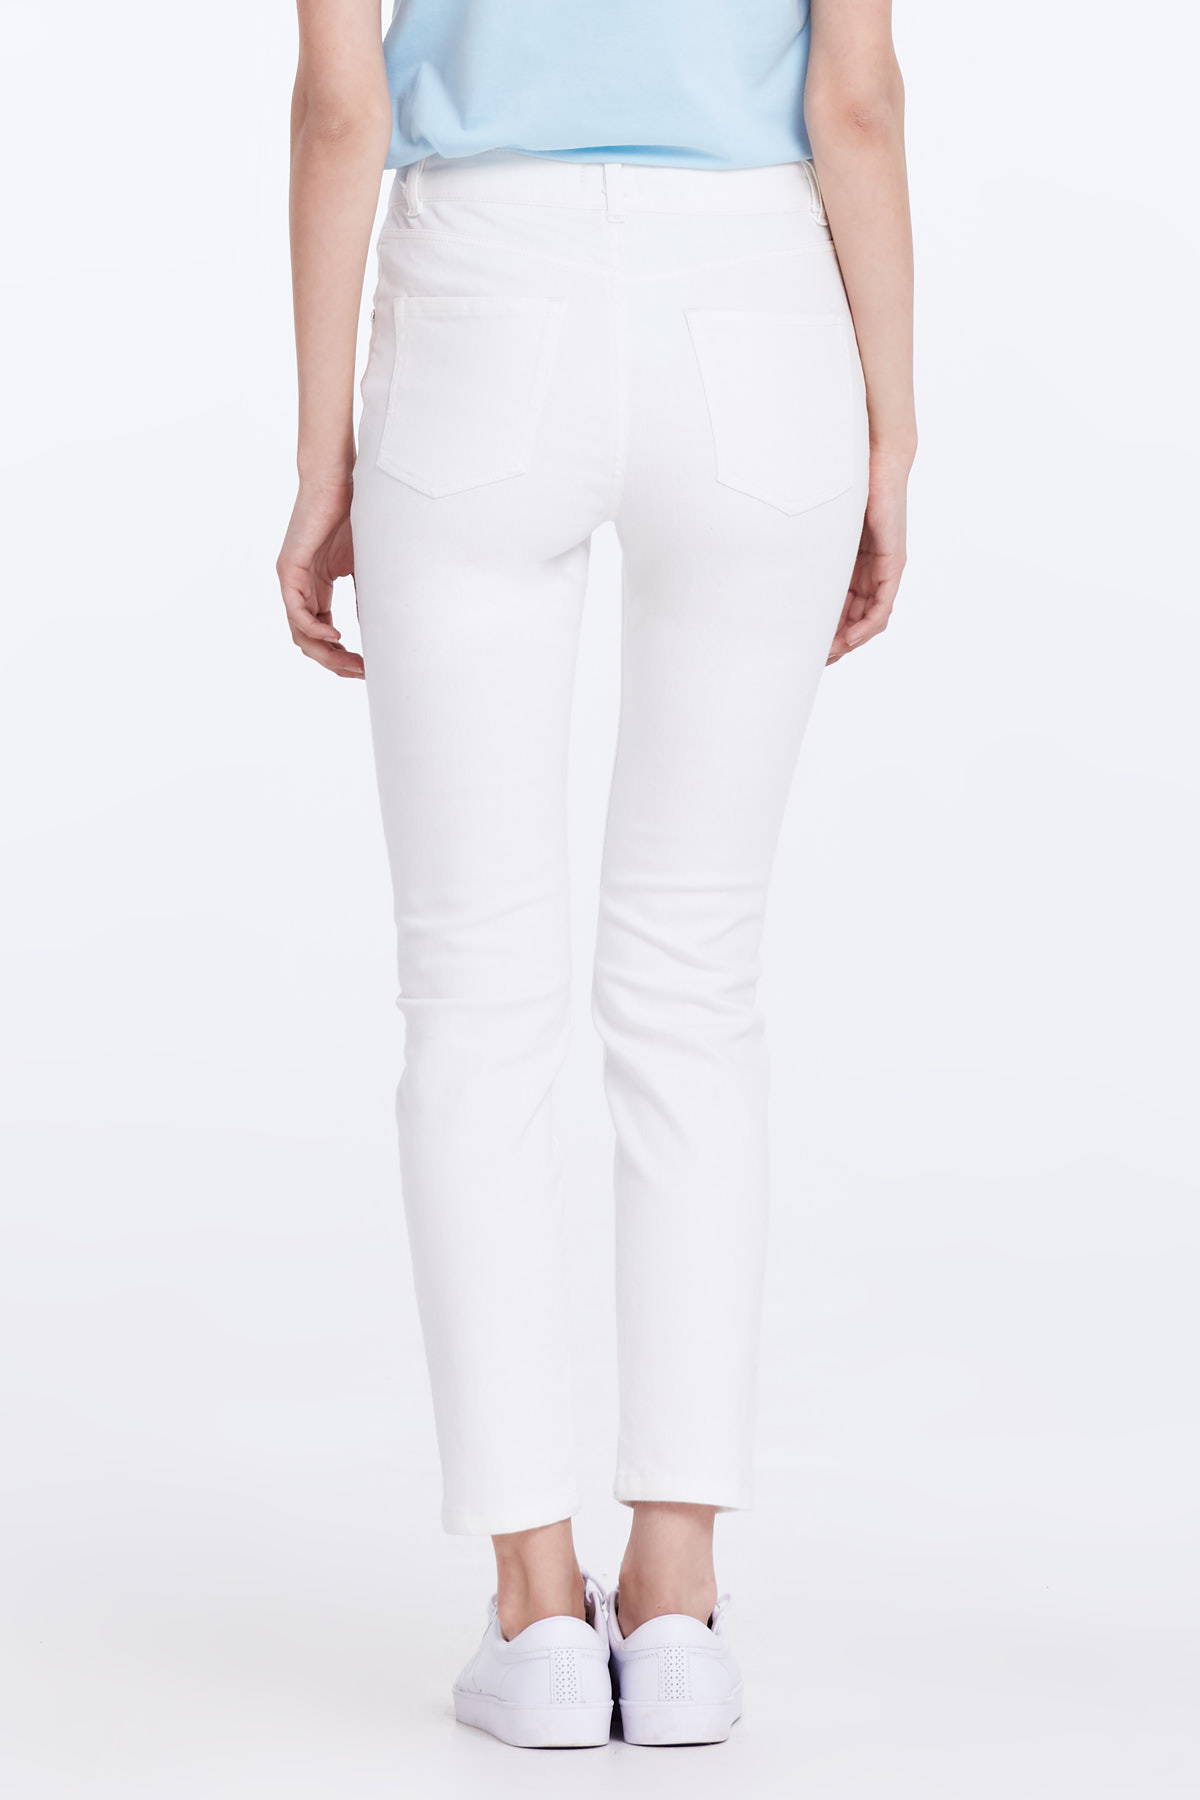 Skinny white jeans, photo 5